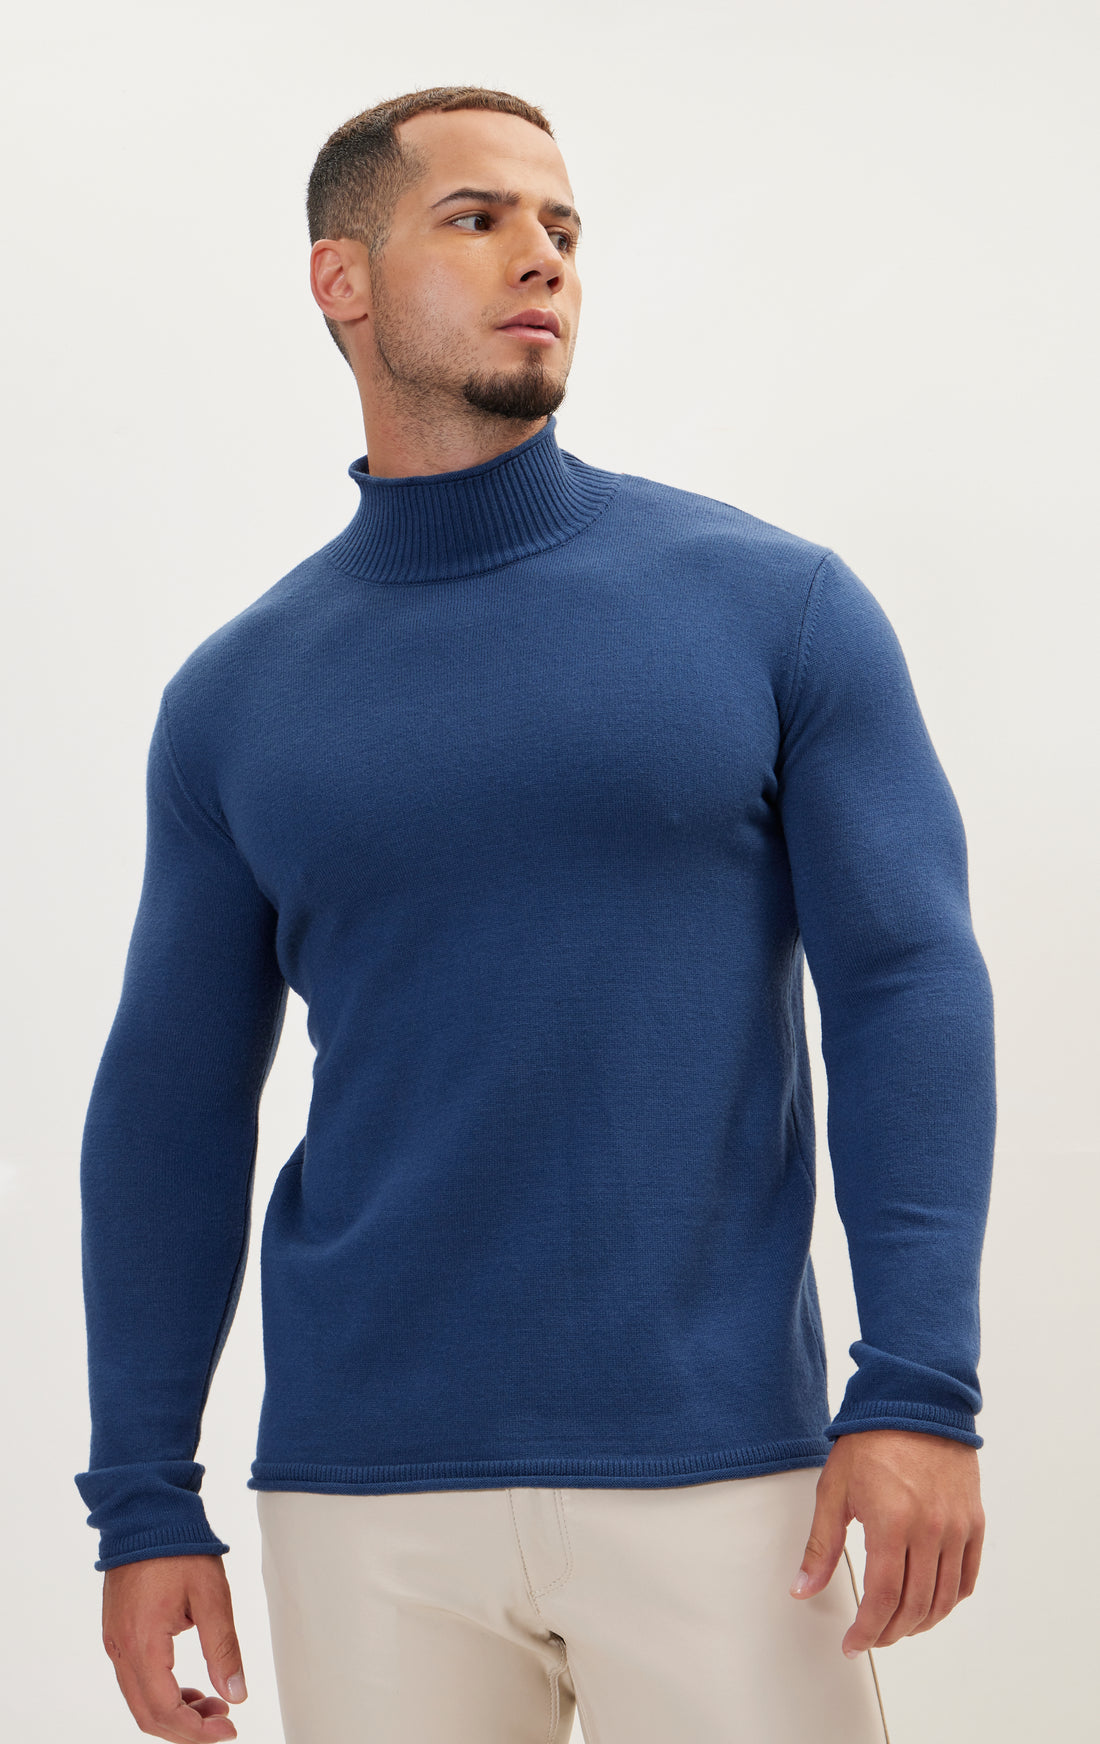 N° 6465 classic mock neck sweater - INDIGO